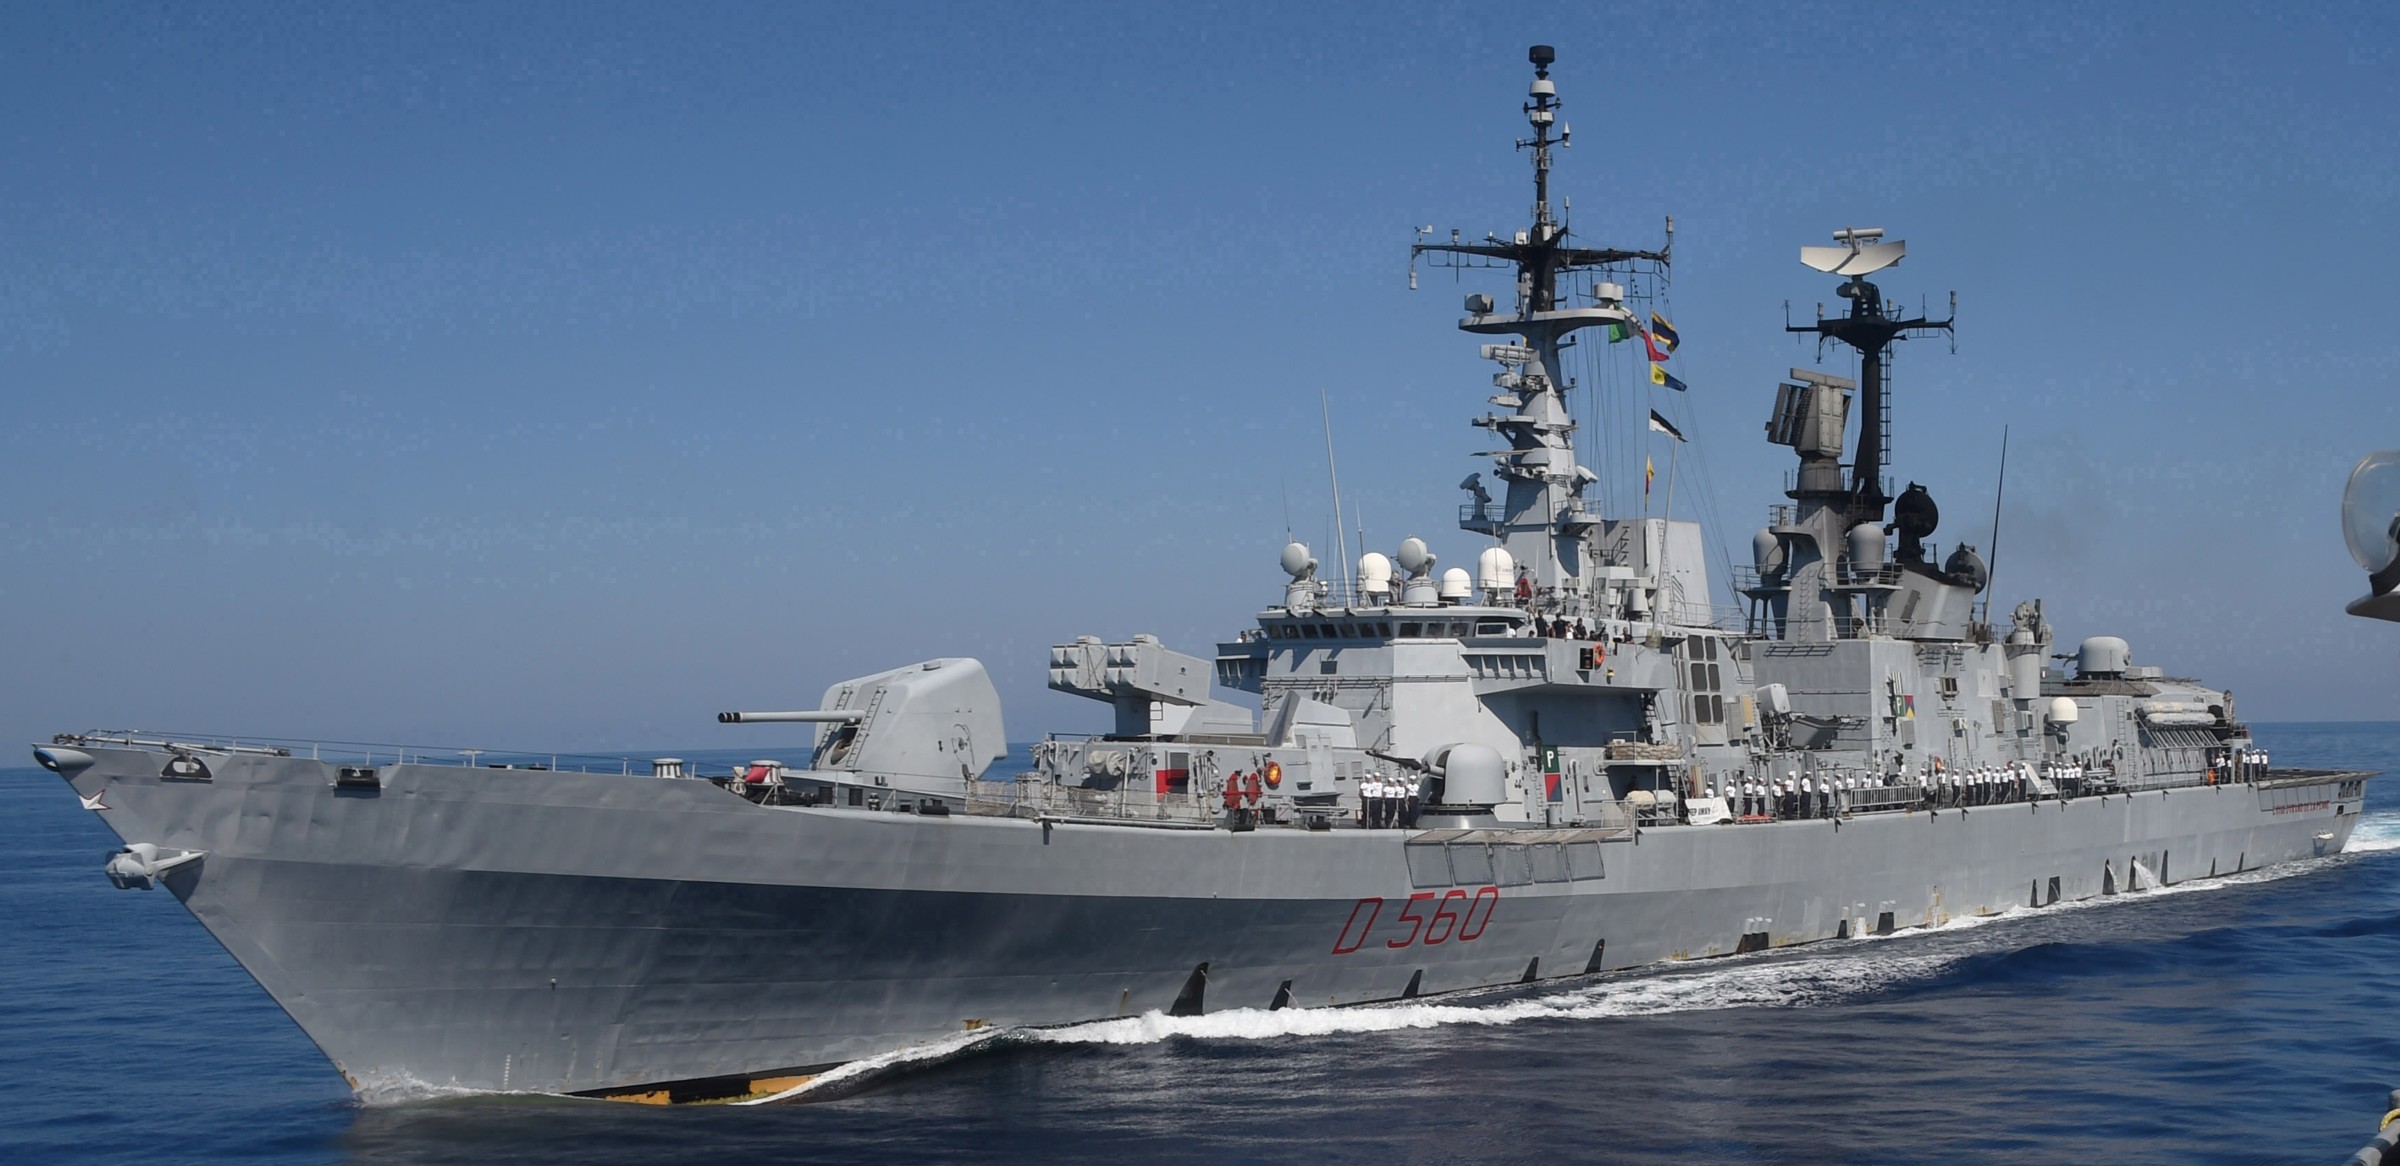 d-560 luigi durand de la penne its nave guided missile destroyer ddg italian navy marina militare 21